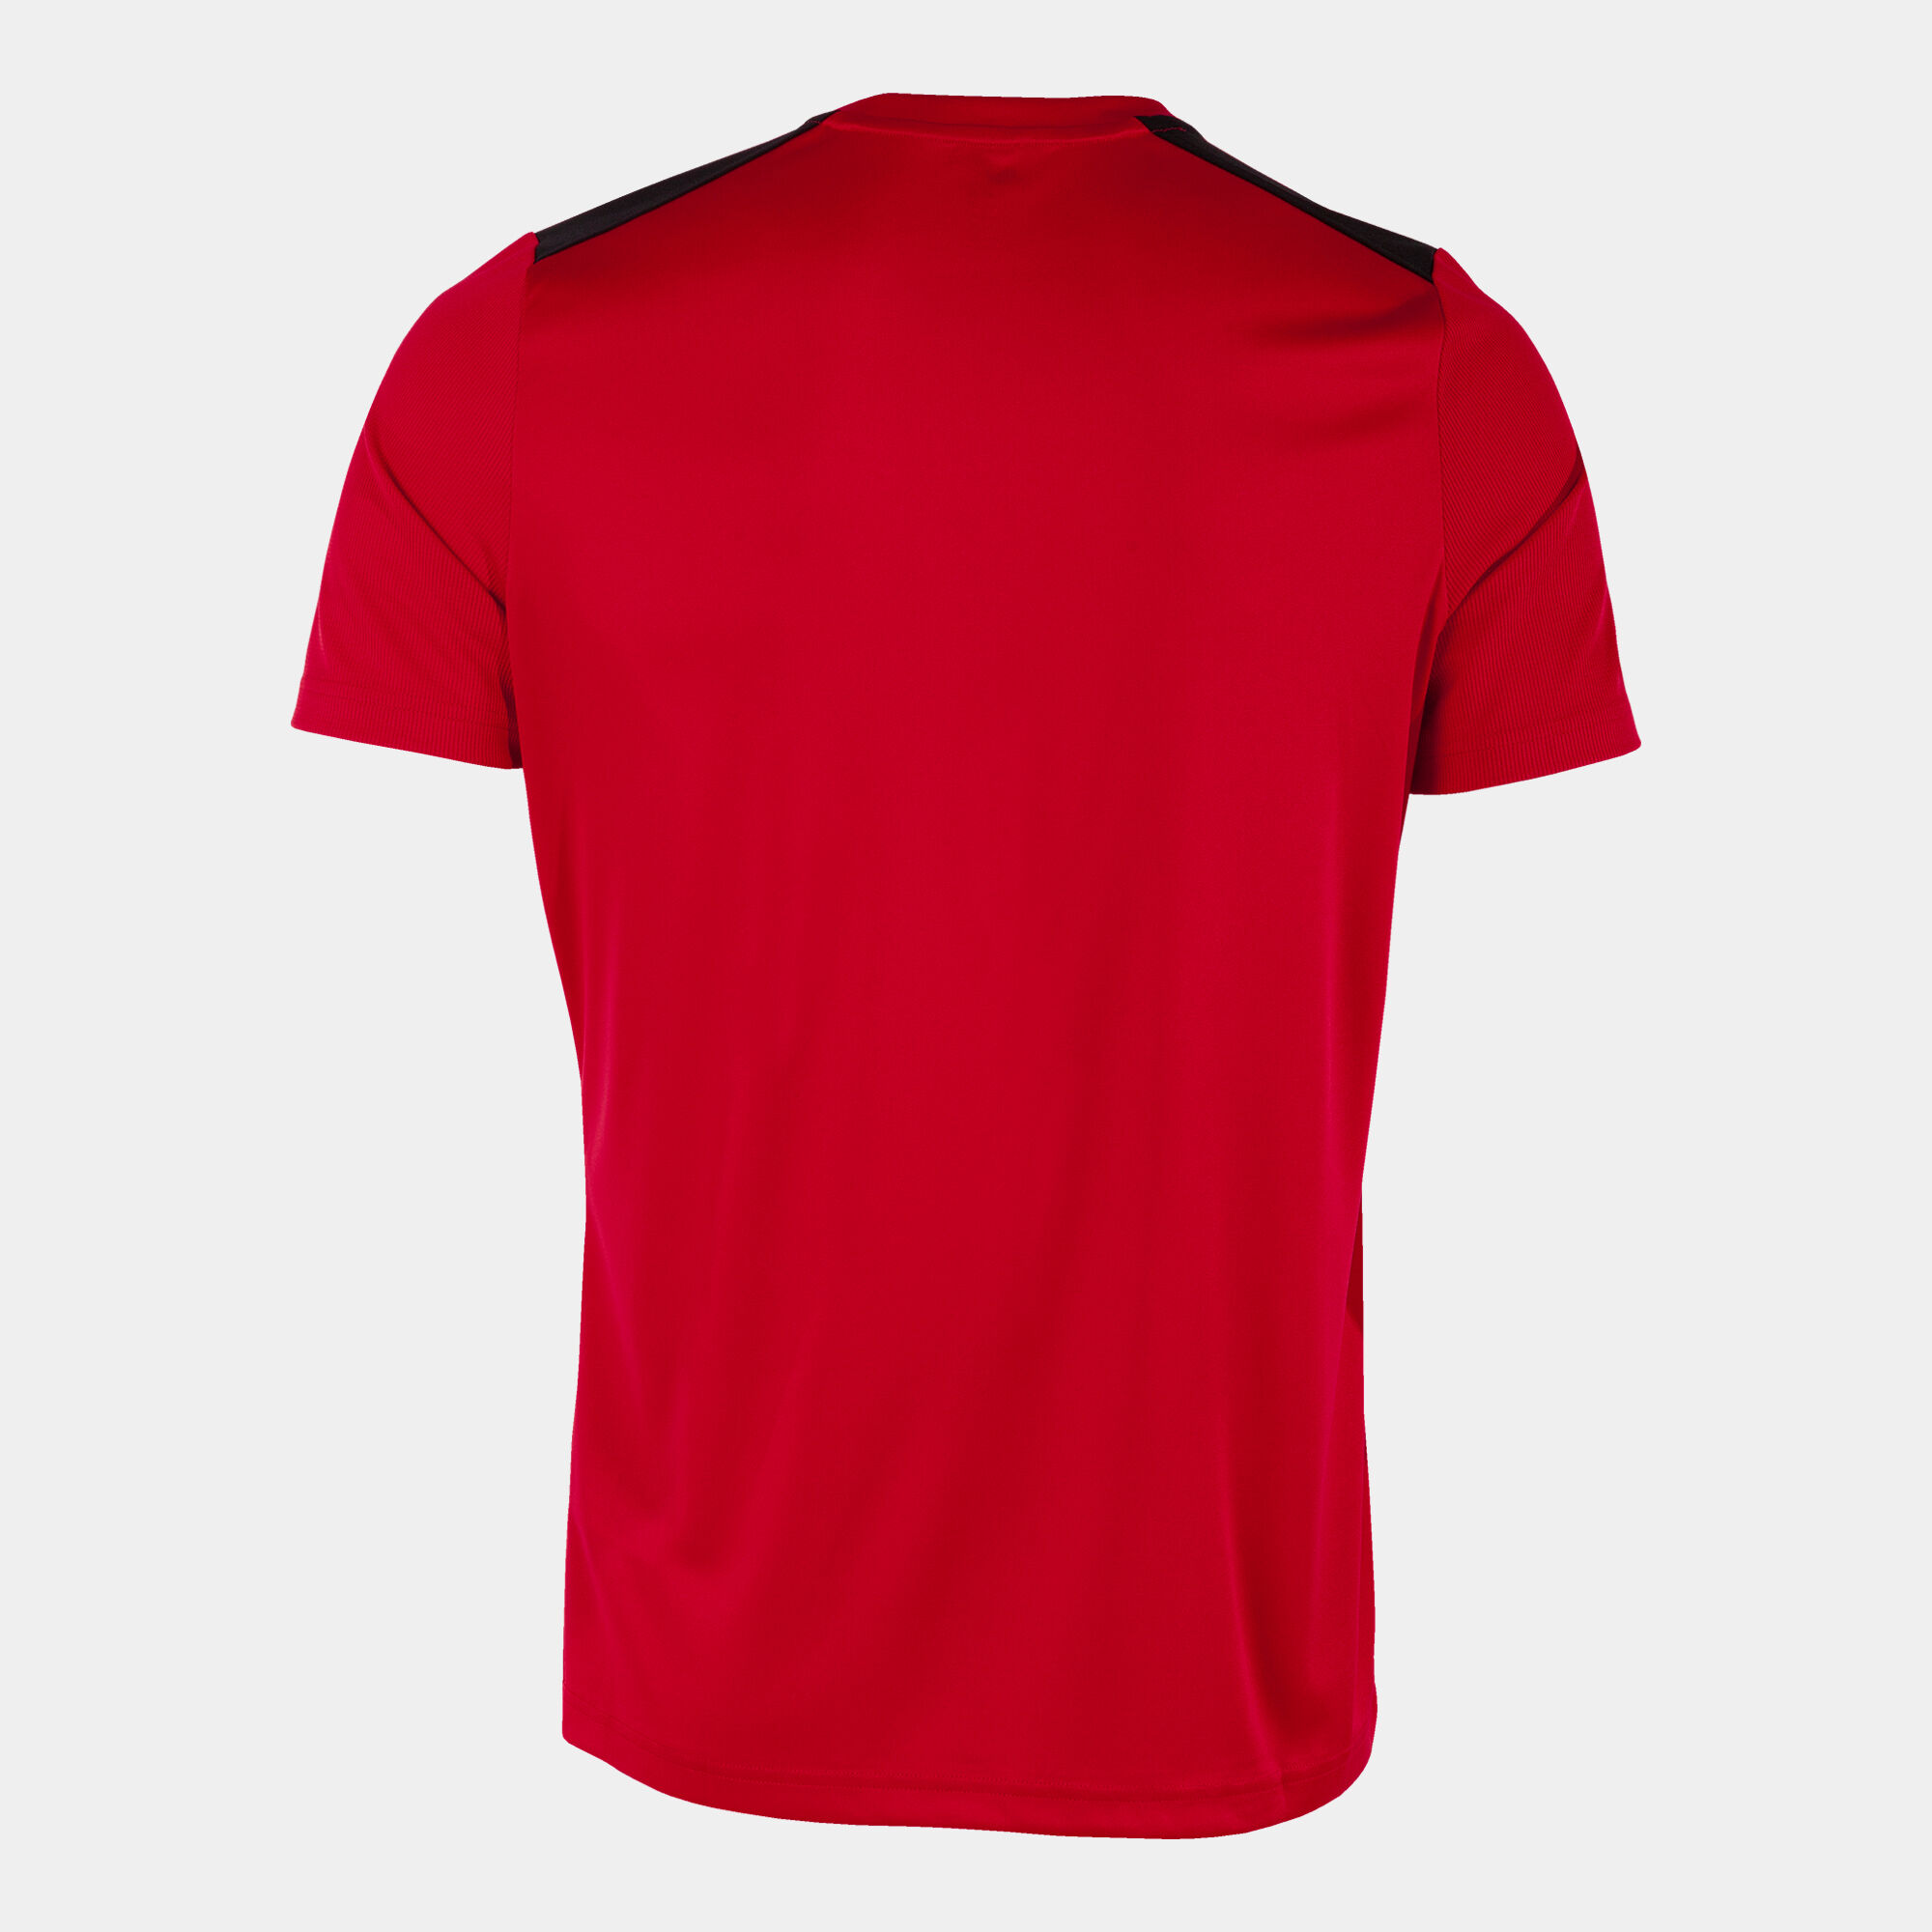 Camiseta manga corta hombre Championship VII rojo negro